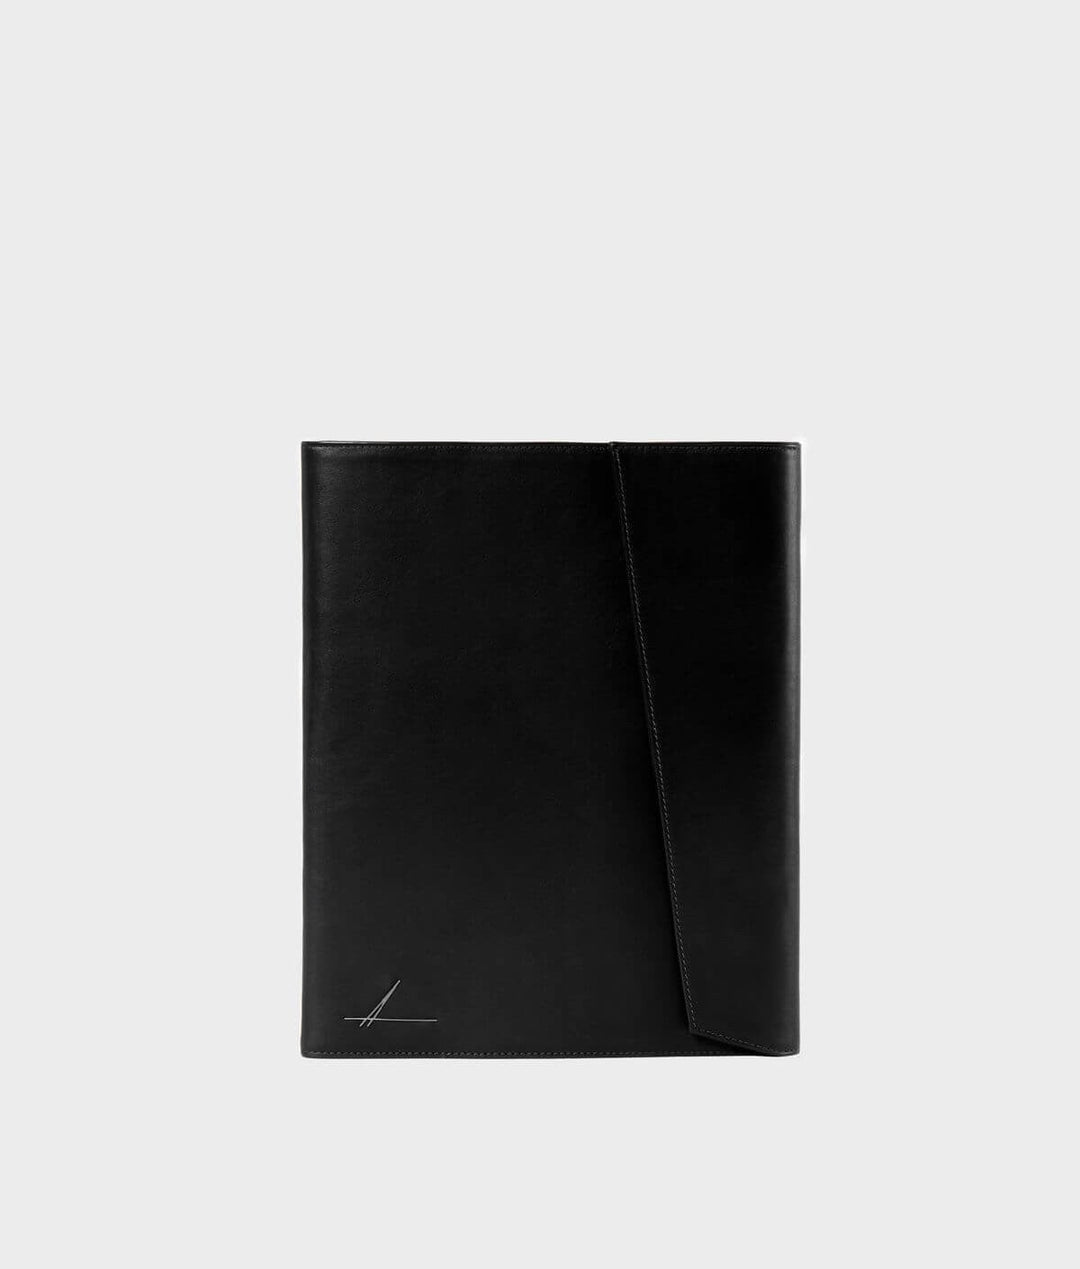 Black leather portfolio folder against a gray background